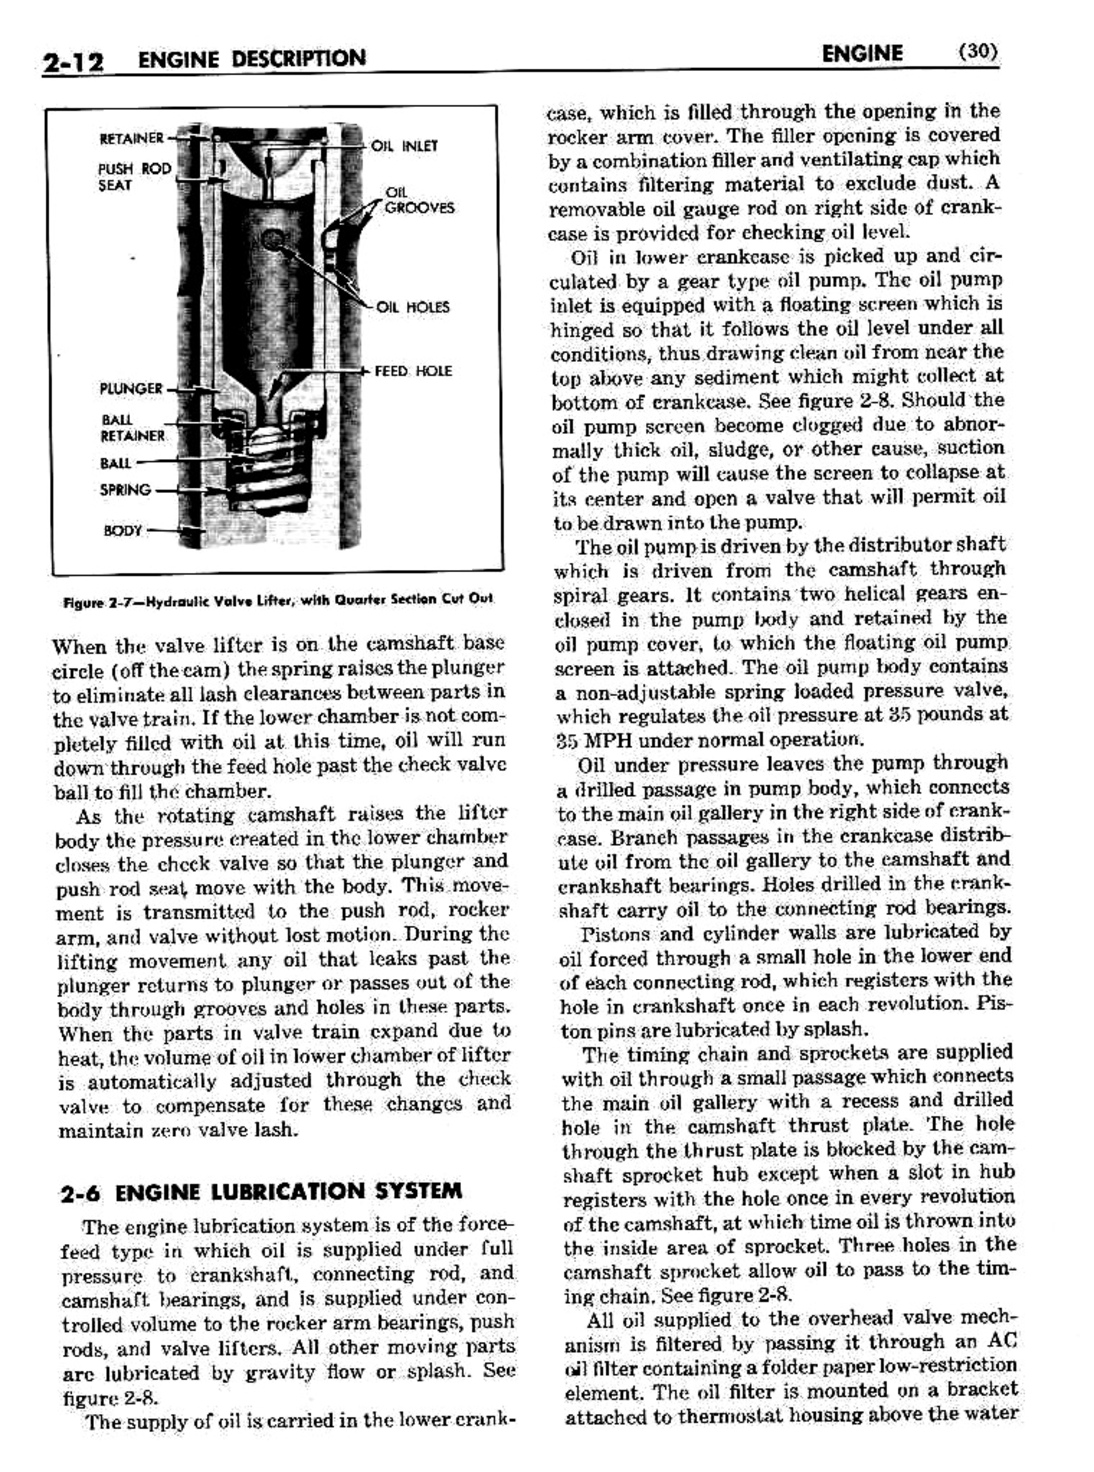 n_03 1951 Buick Shop Manual - Engine-012-012.jpg